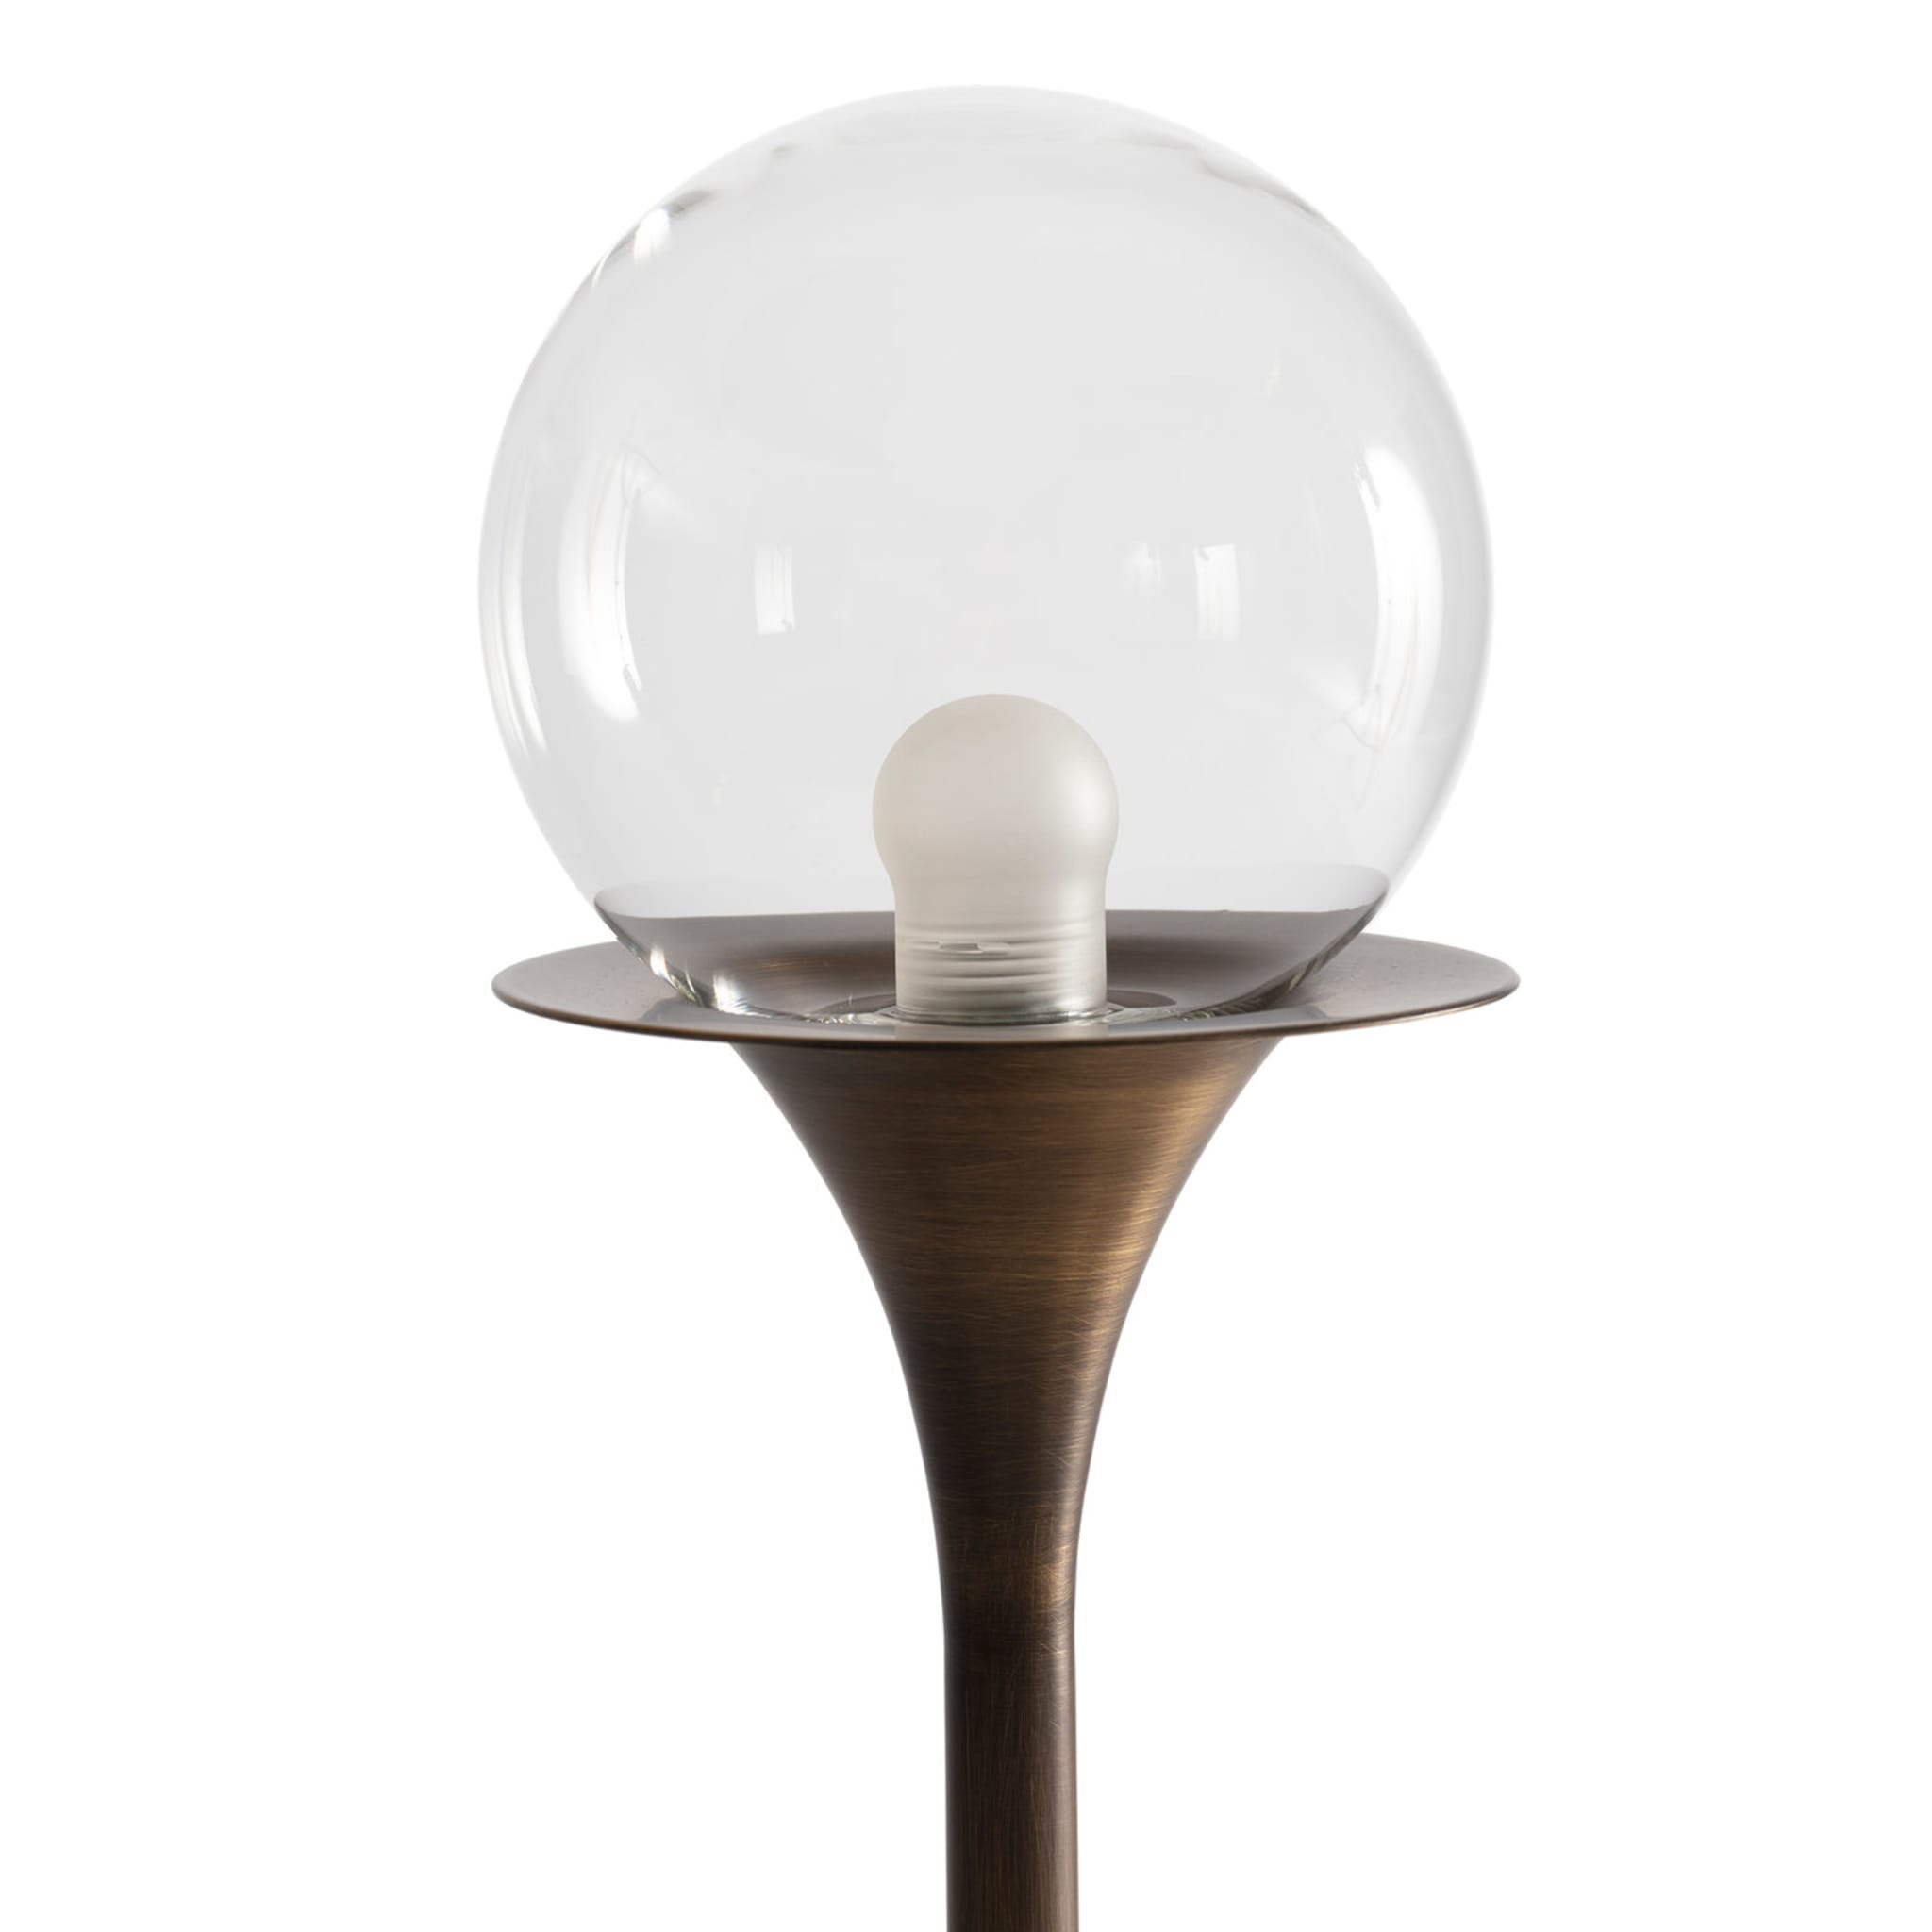 Bricola 01 Table Lamp by Ciarmoli Queda Studio - Alternative view 2